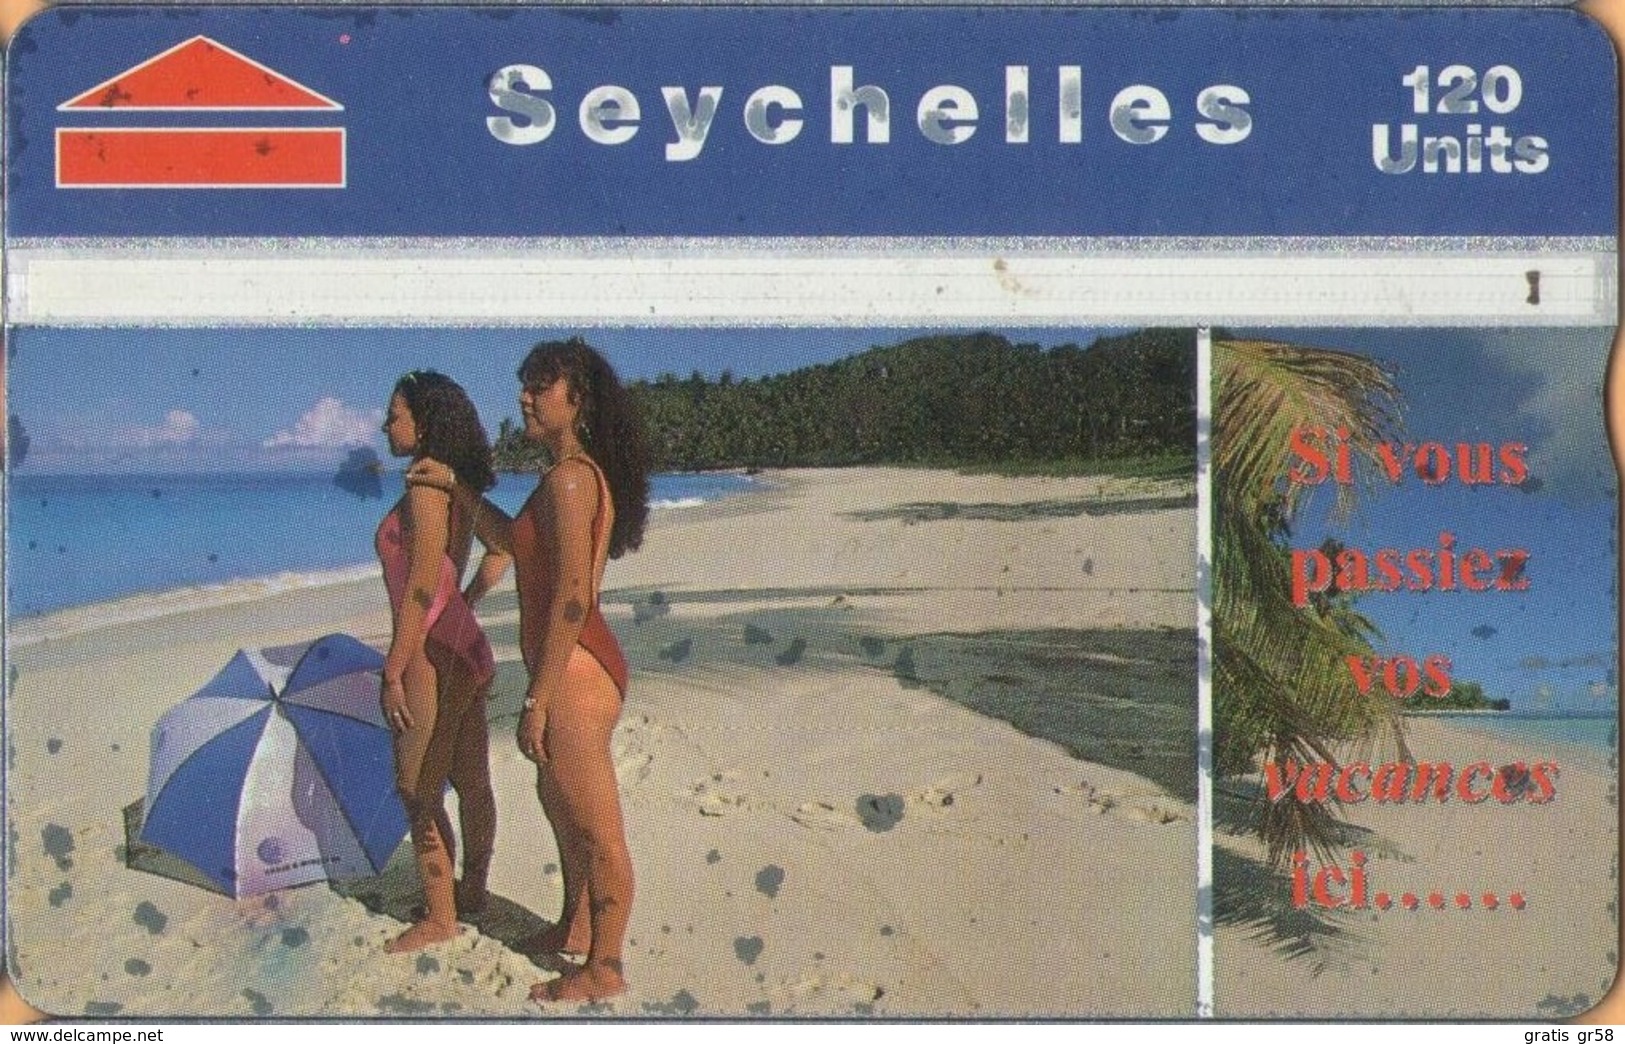 Seychelles - L&G, SEY-41, Beach Scene With Girls, 708A, 44,000ex, 8/97, Used As Scan - Seychelles